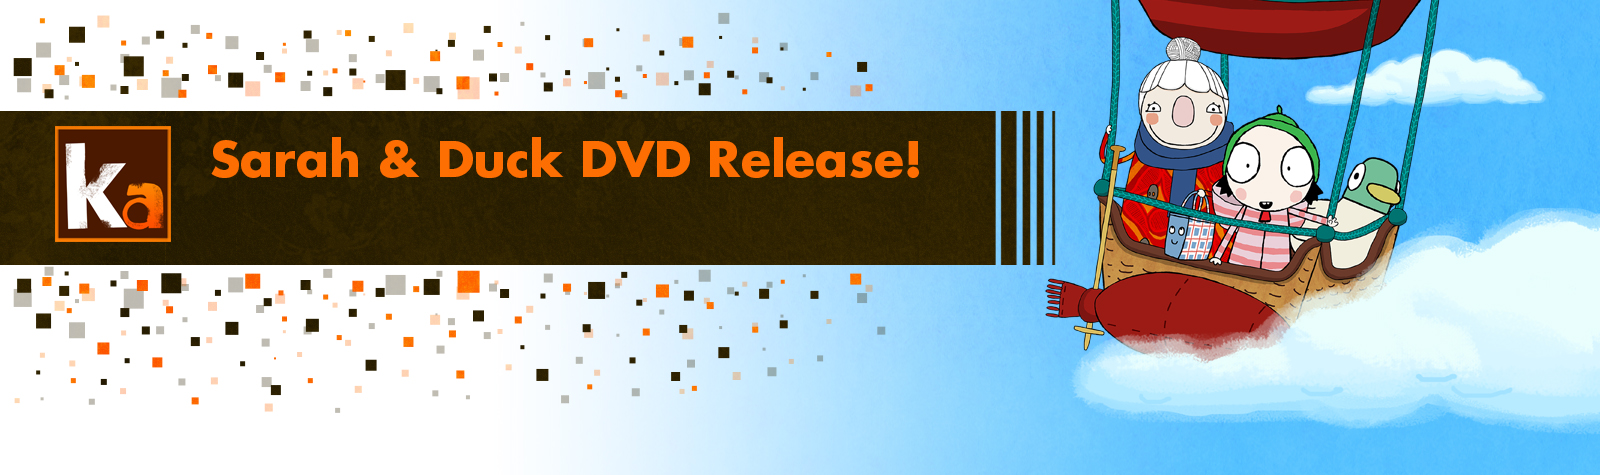 Sarah & Duck DVD Release!